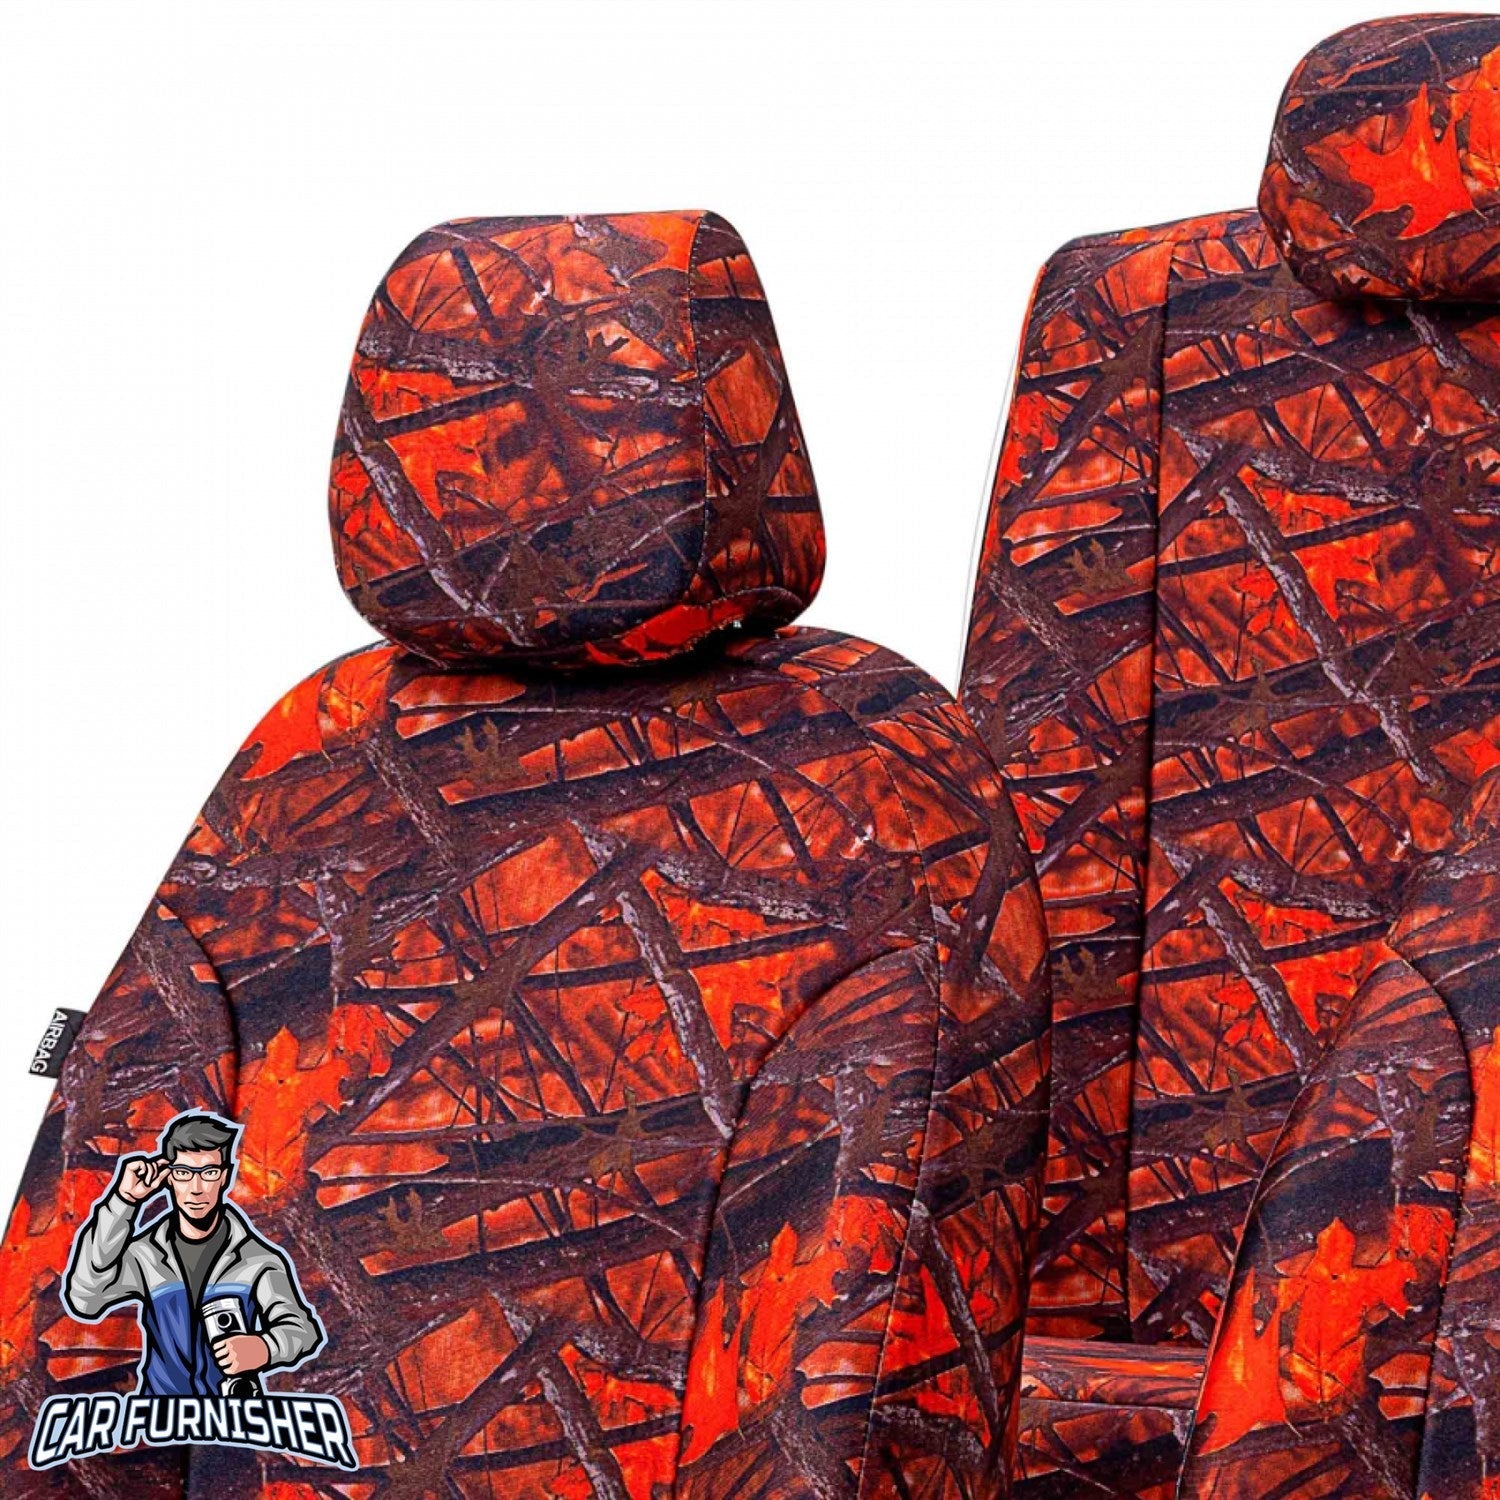 Fiat Marea Seat Covers Camouflage Waterproof Design Sahara Camo Waterproof Fabric